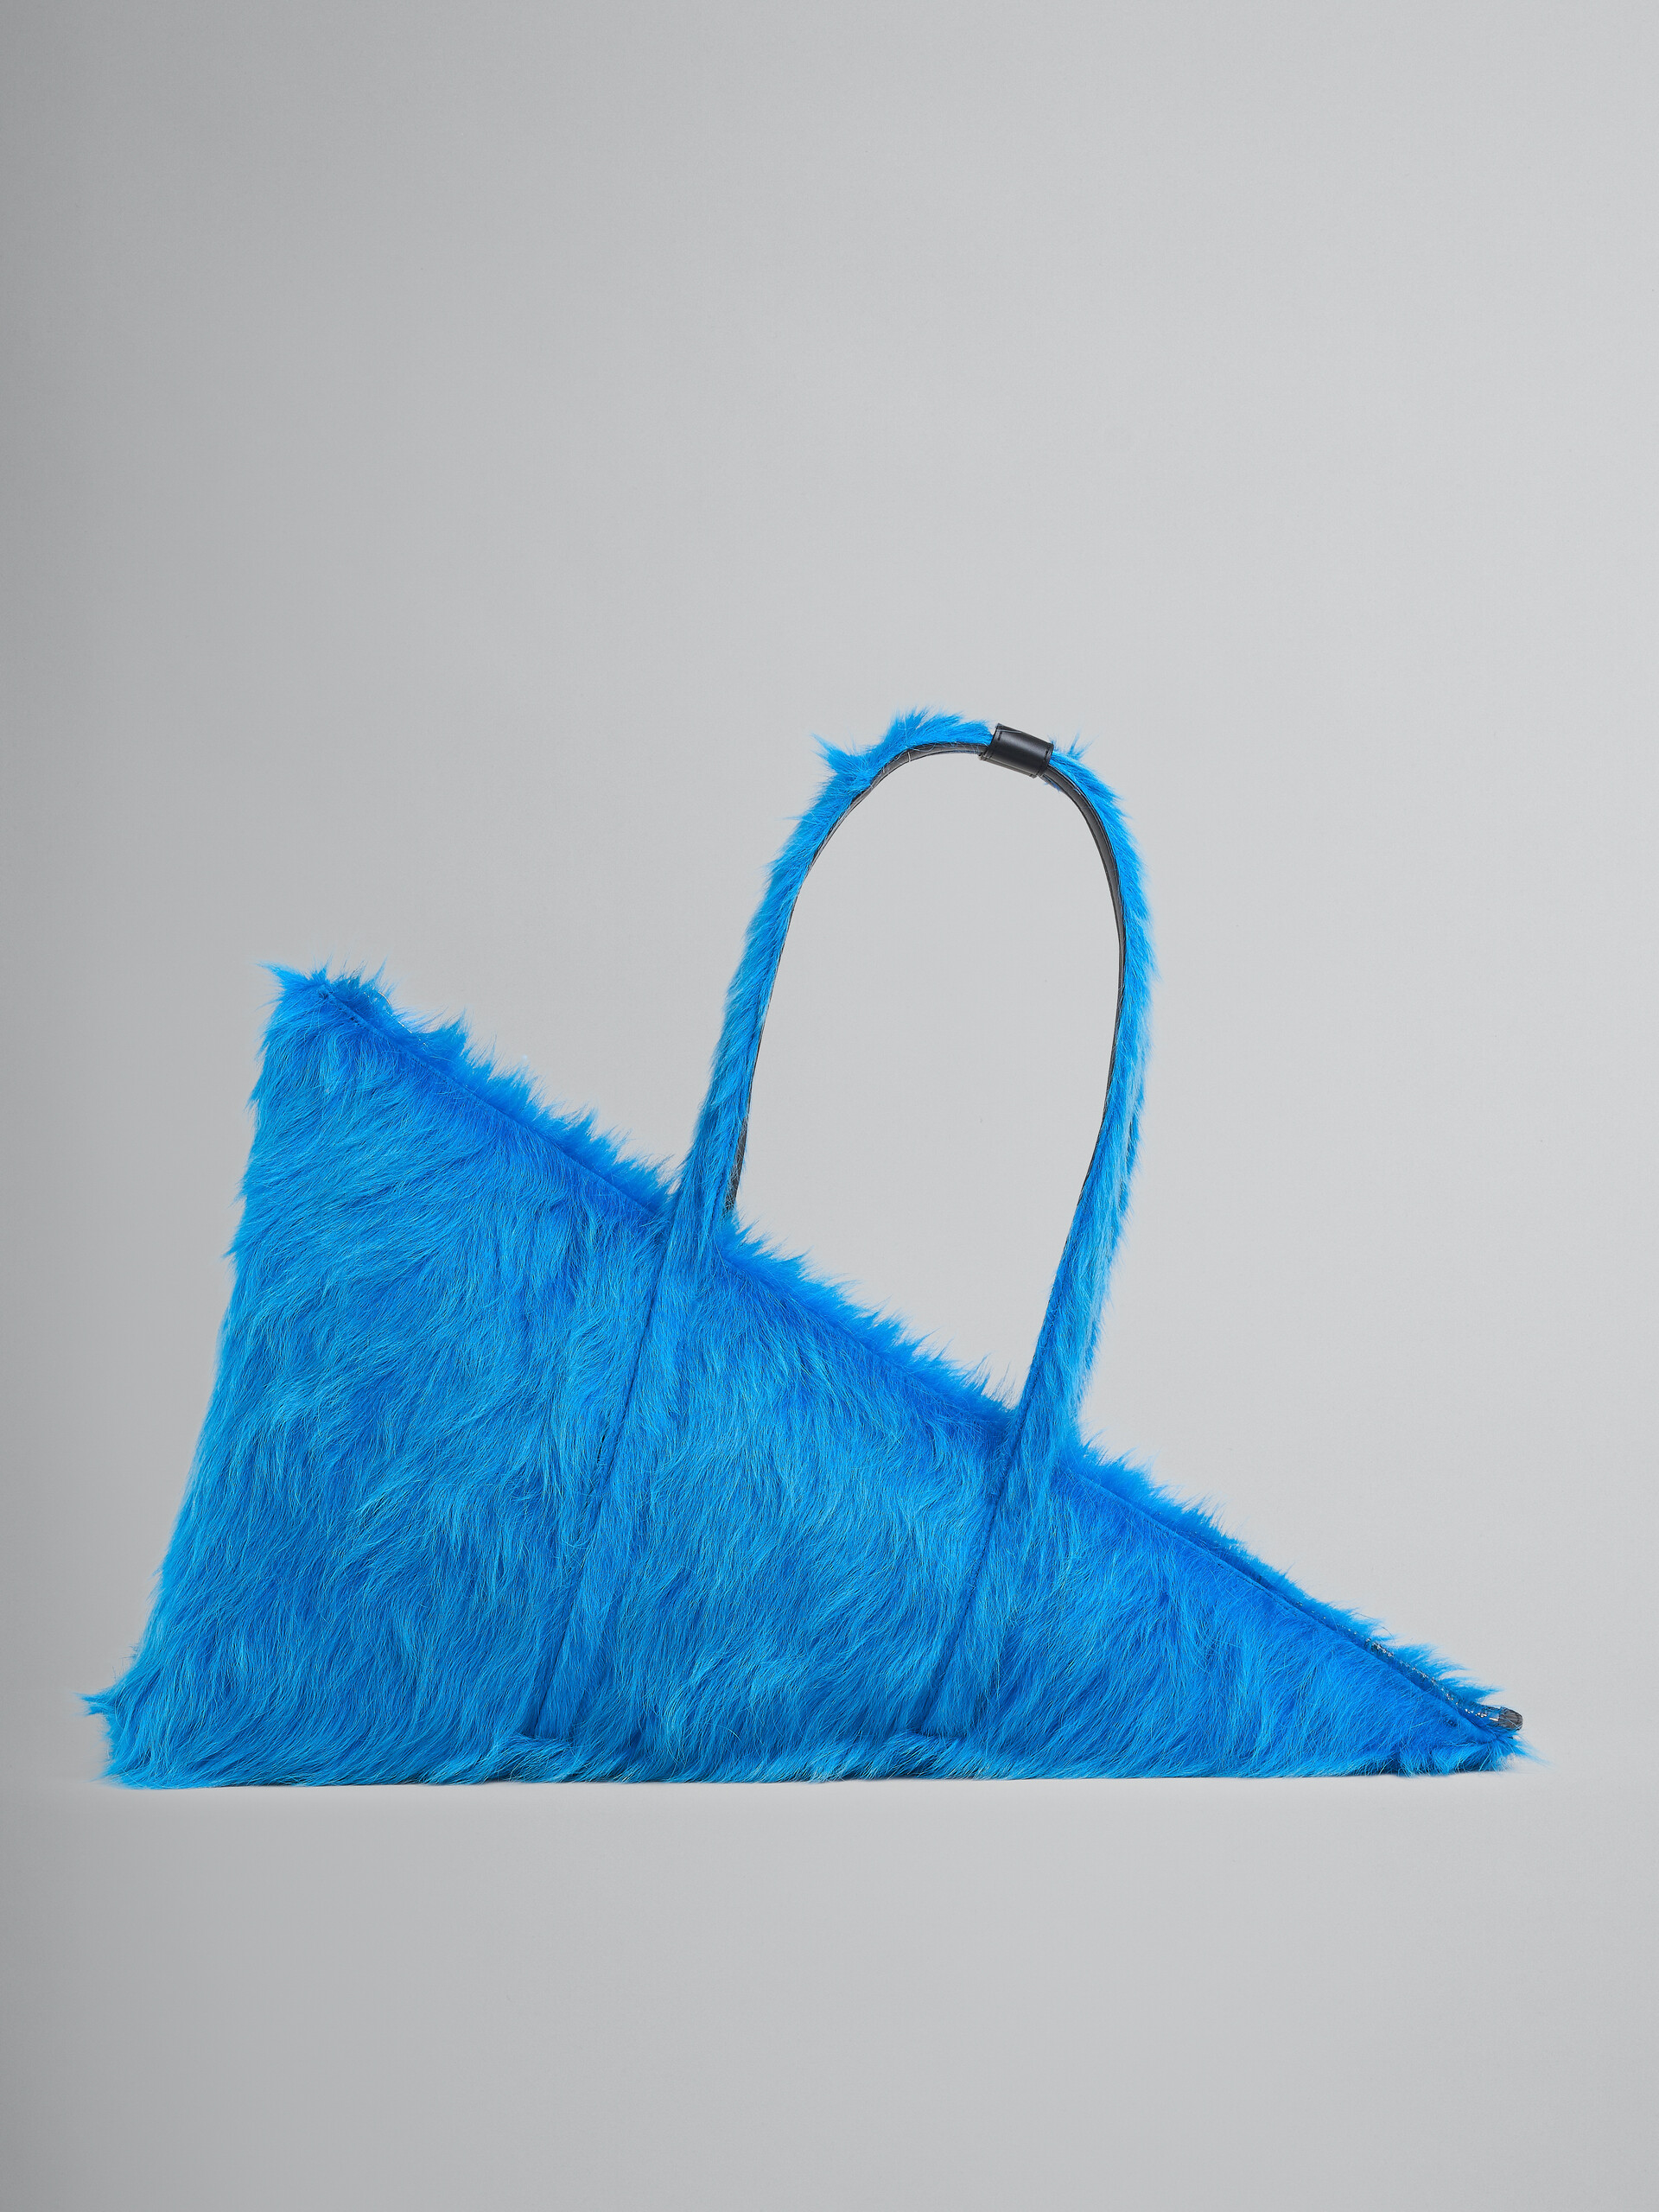 Dreieckige Duffle Bag Prisma aus Kalbsfell in Blau - Reisetasche - Image 1